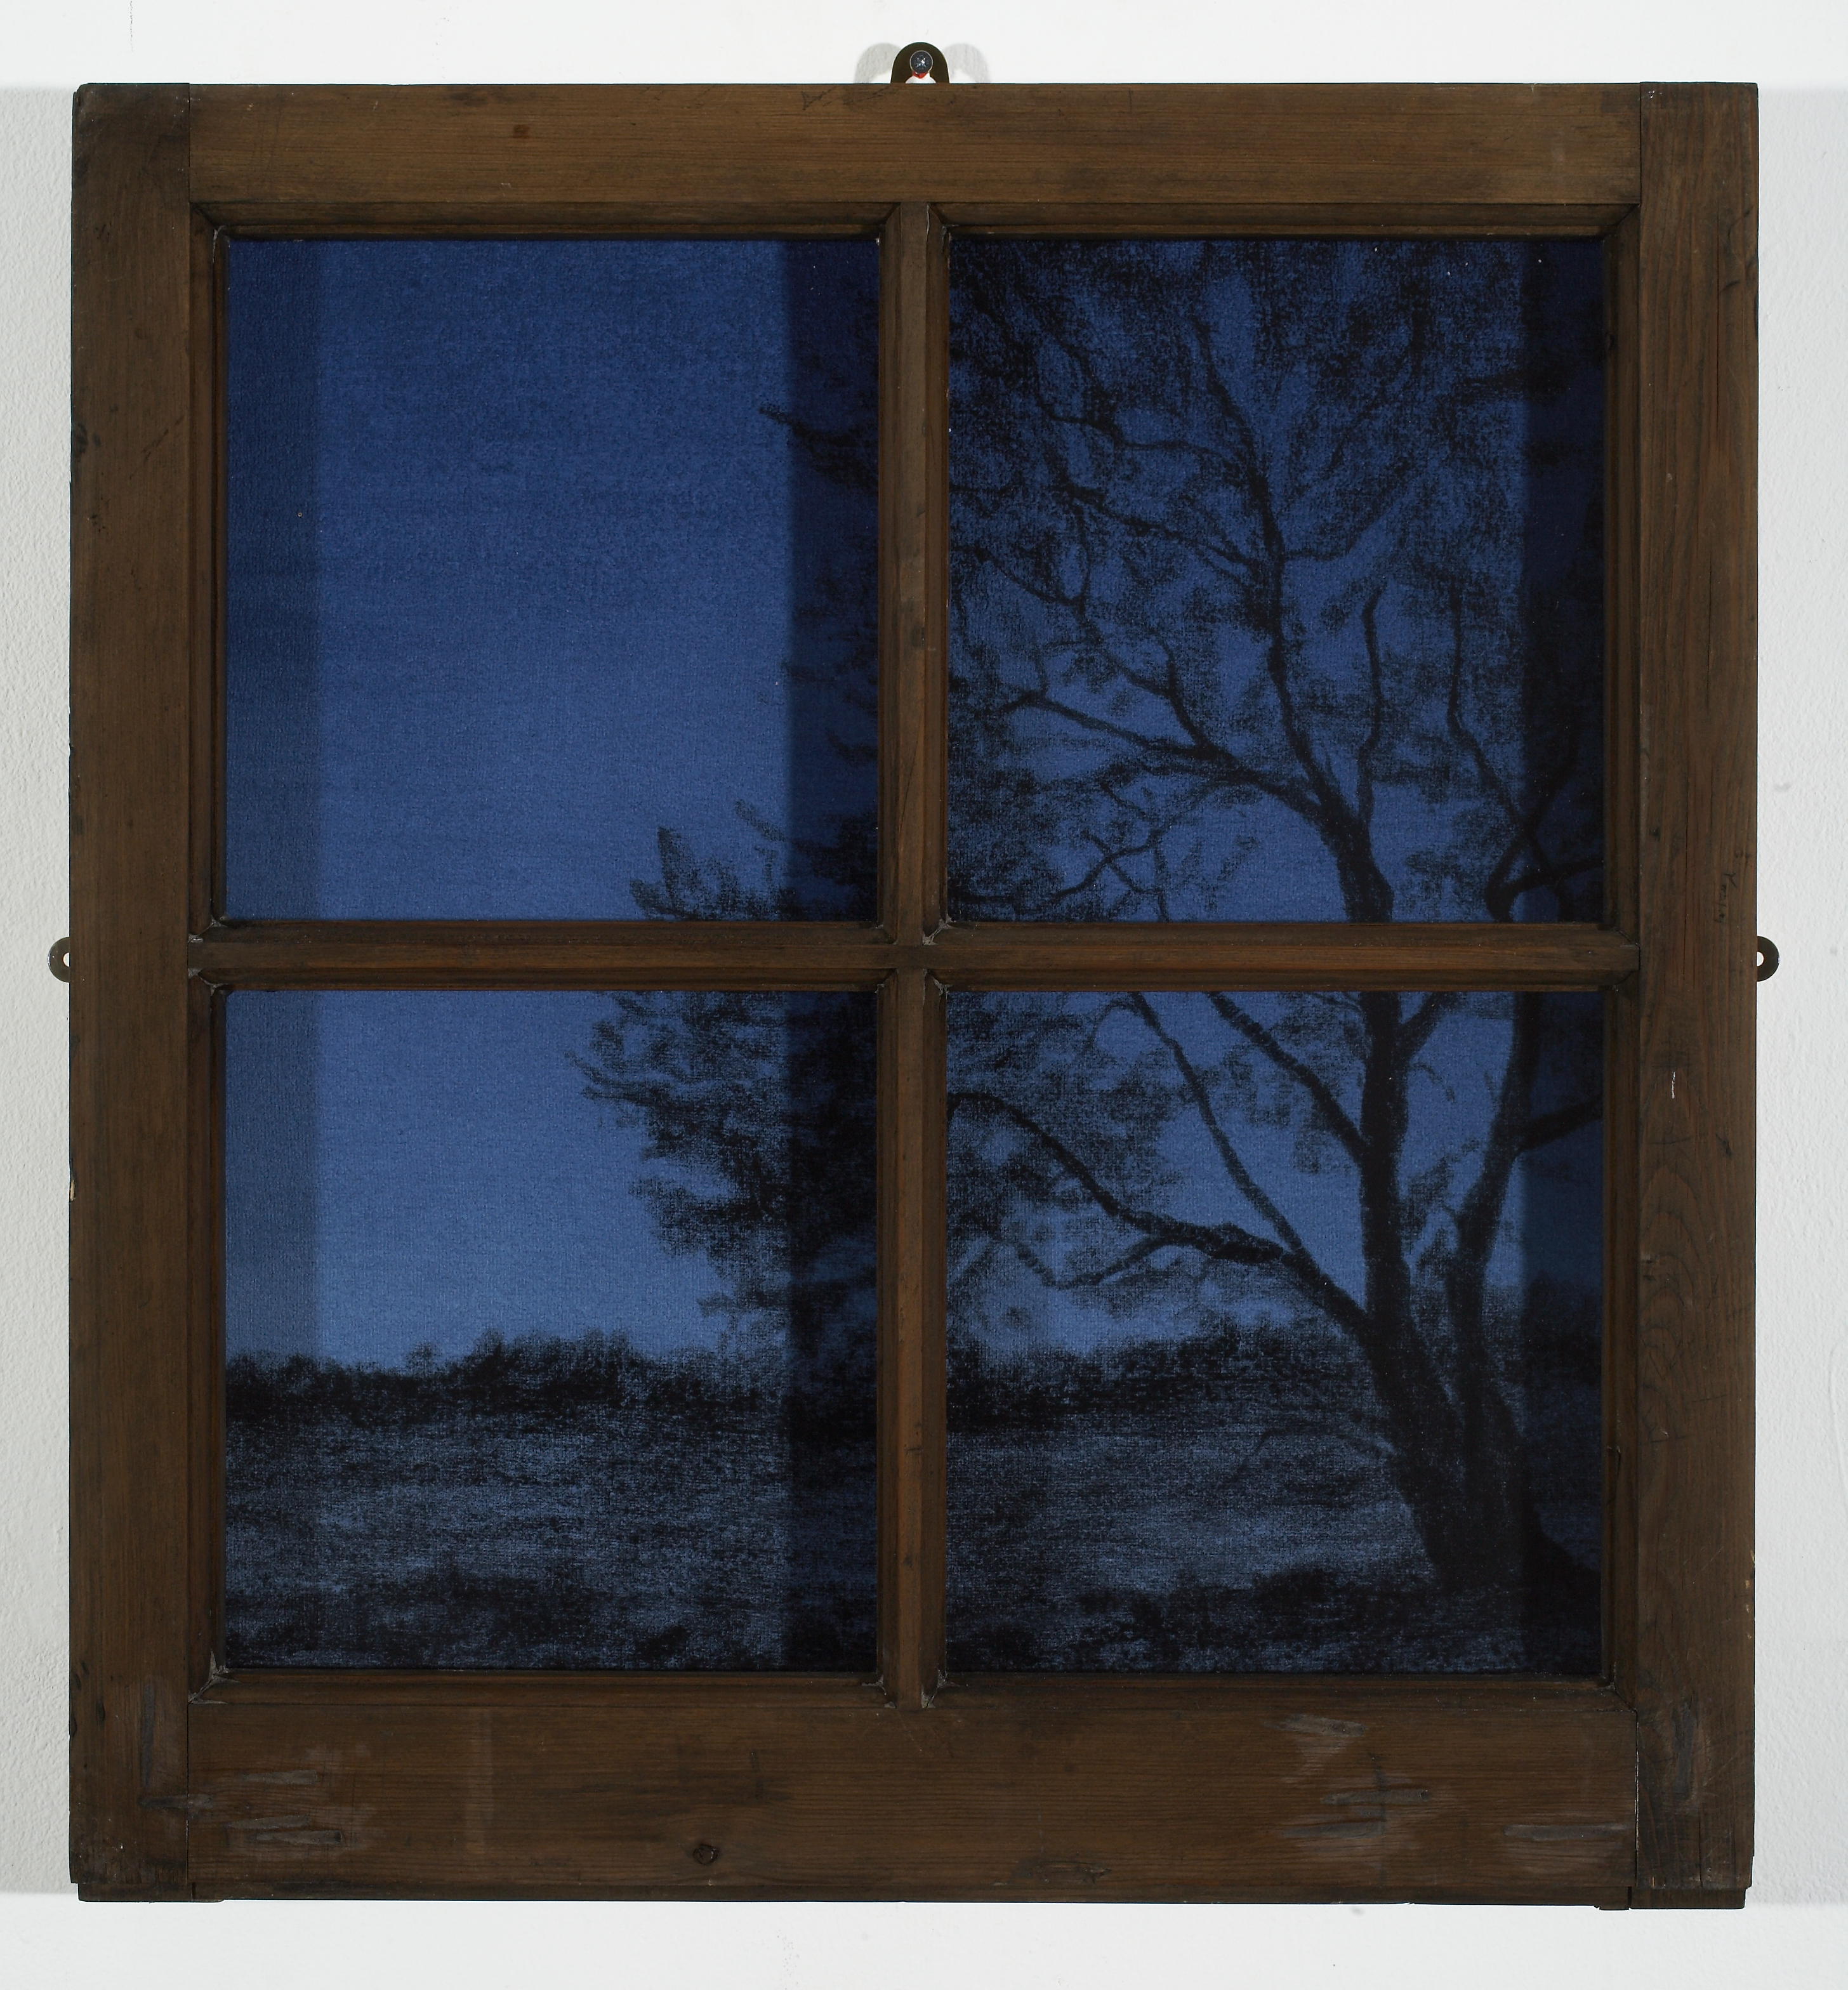 Rachel McDonnell, Window II, The Auction Collective